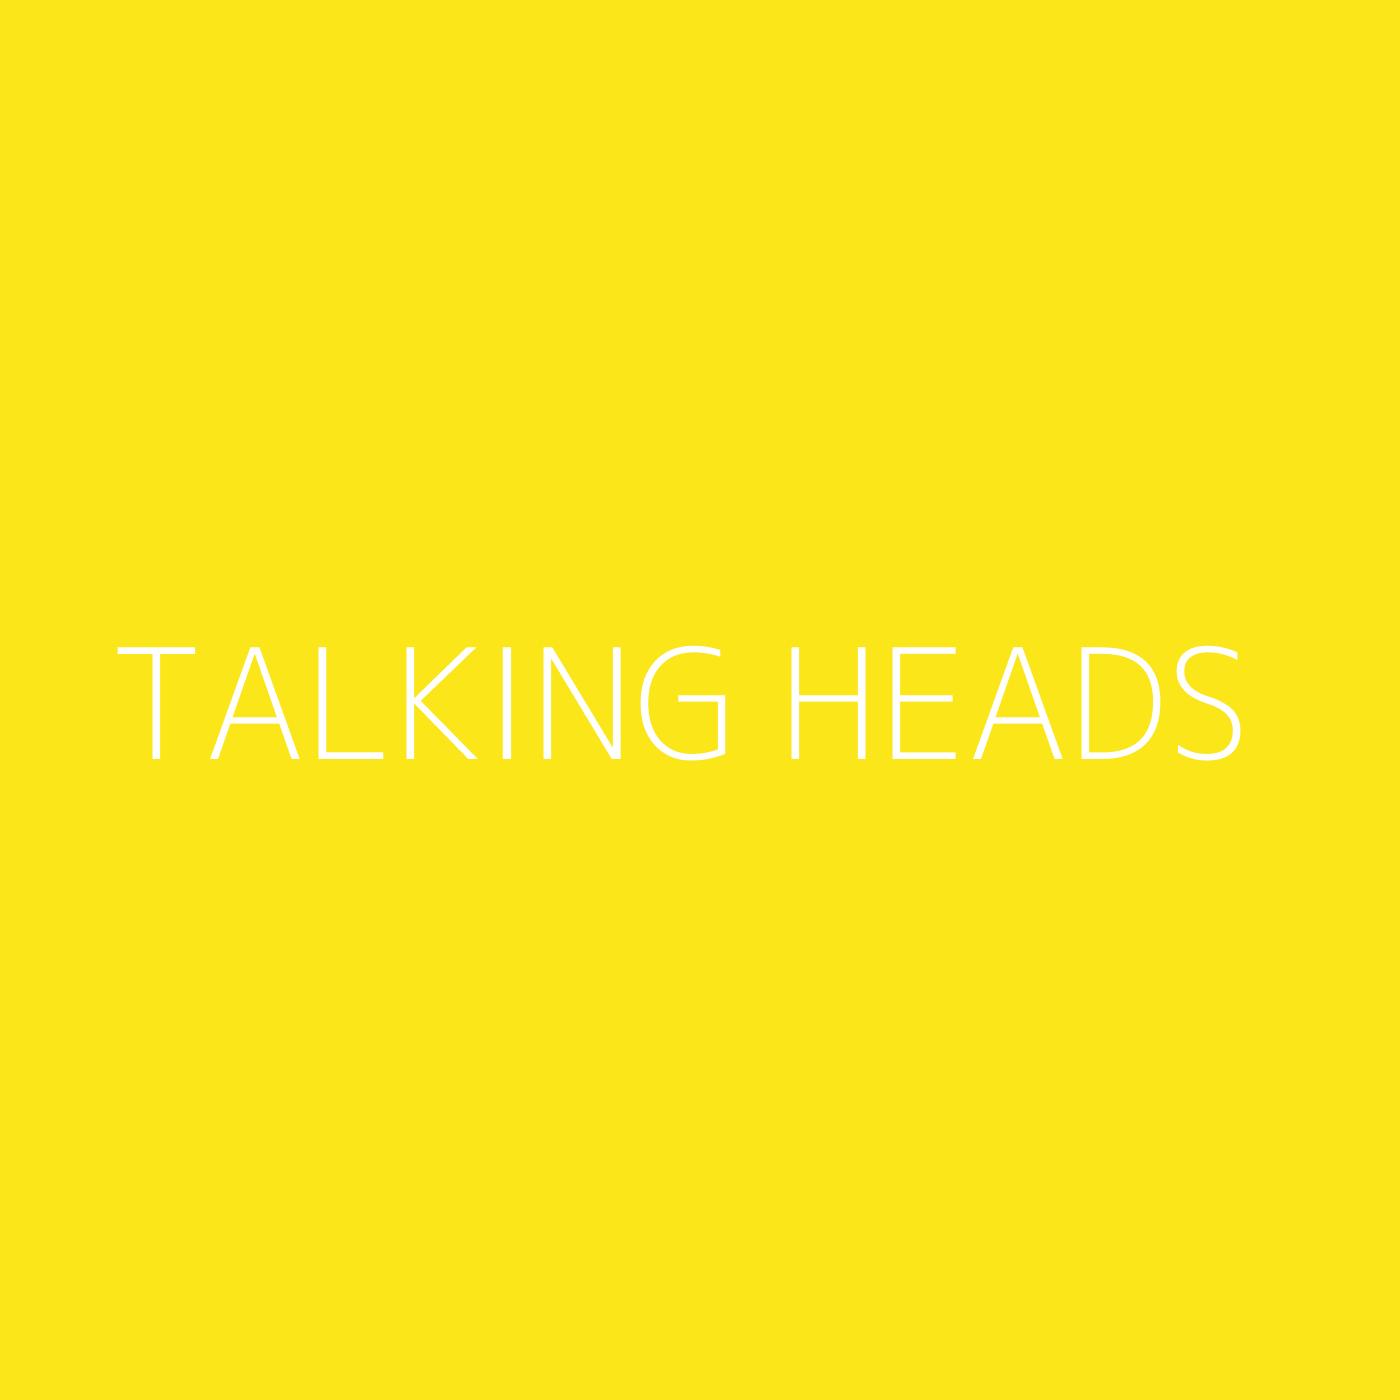 Talking Heads Playlist Artwork